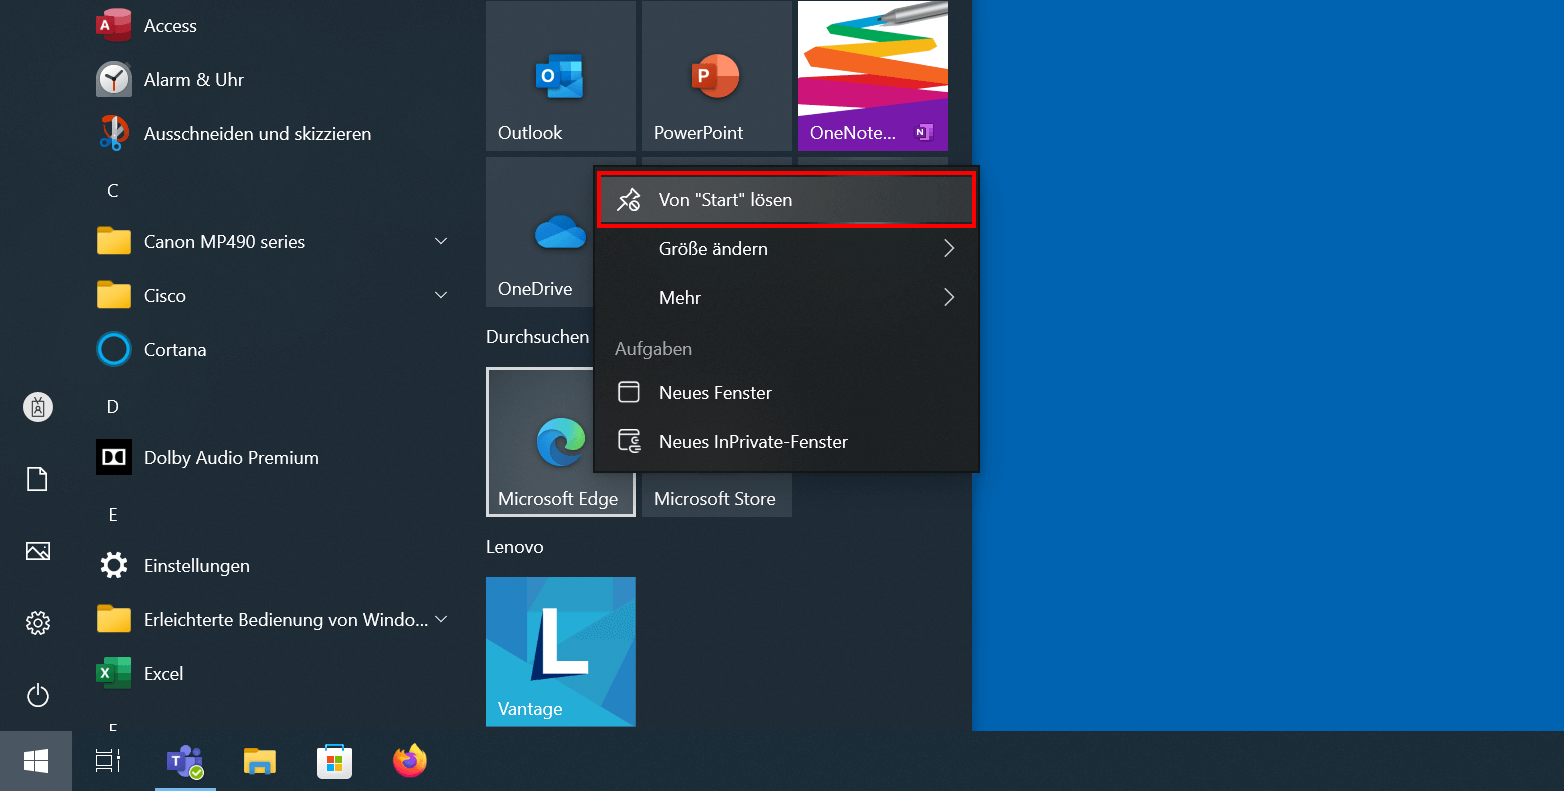 Microsoft-Edge-Kachel im Windows-Startmenü